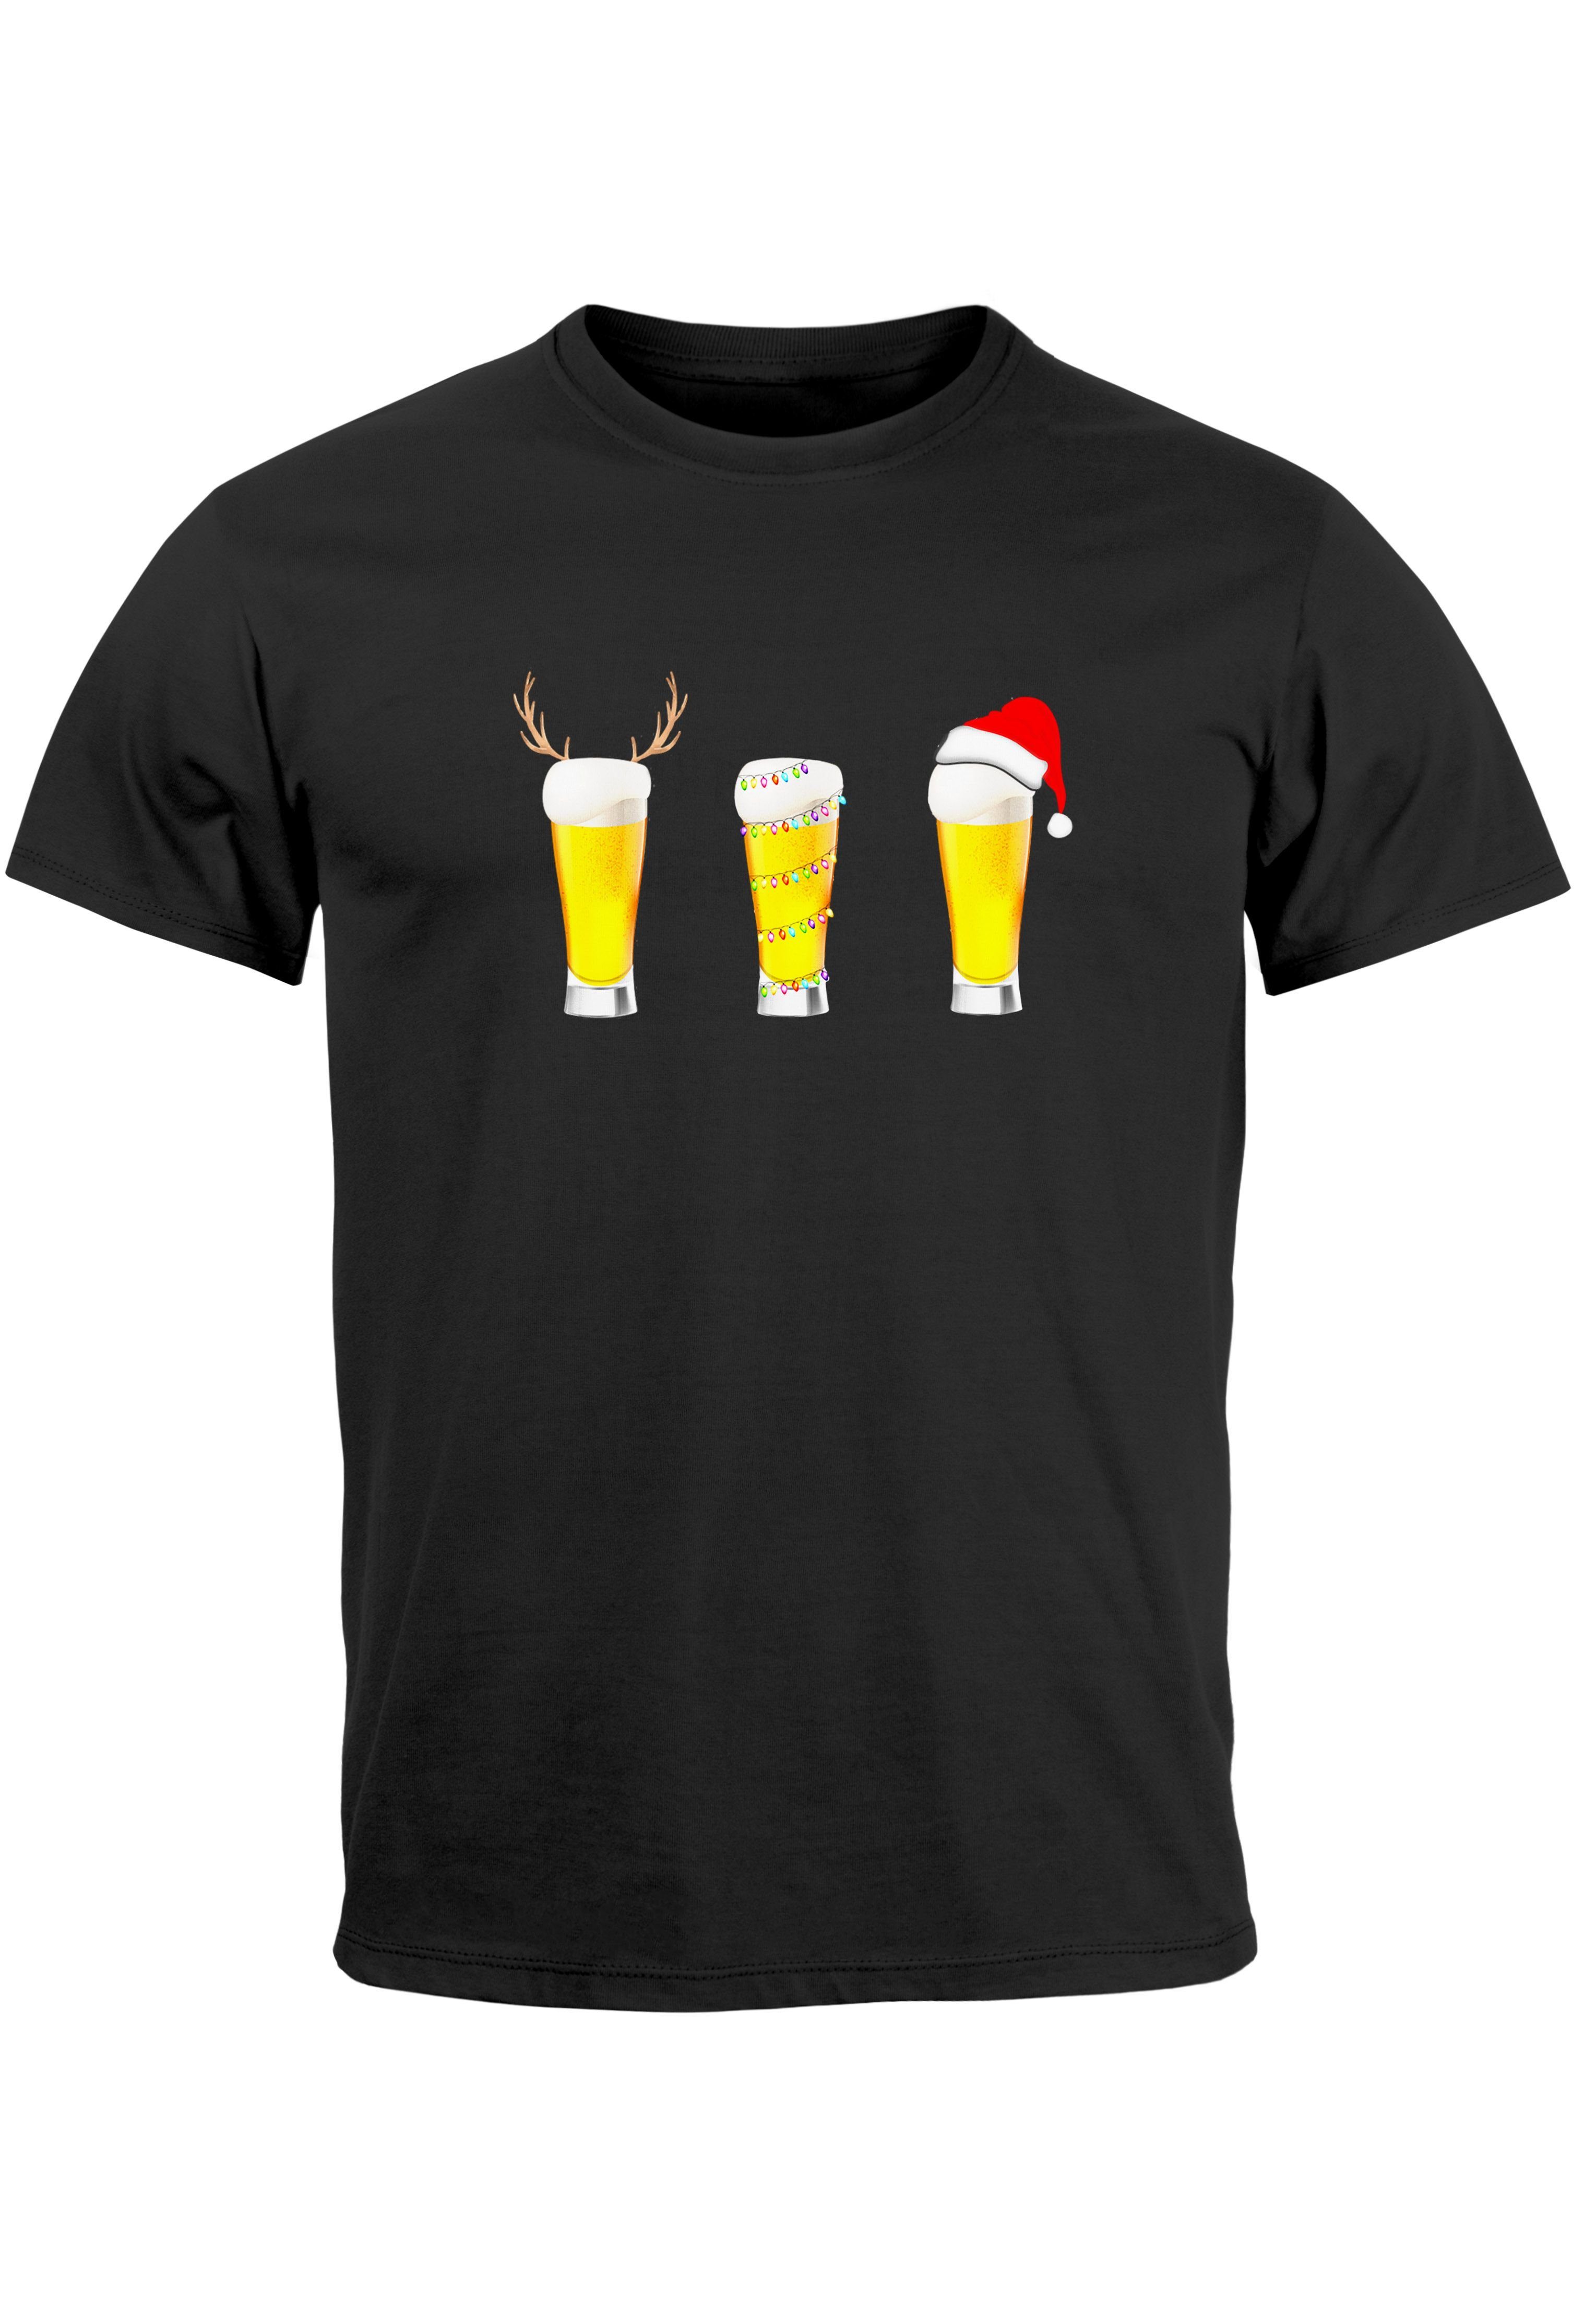 MoonWorks Print-Shirt Herren T-Shirt Weihnachten Bier Lustig Fun-Shirt Alkohol Biergläser Sa mit Print